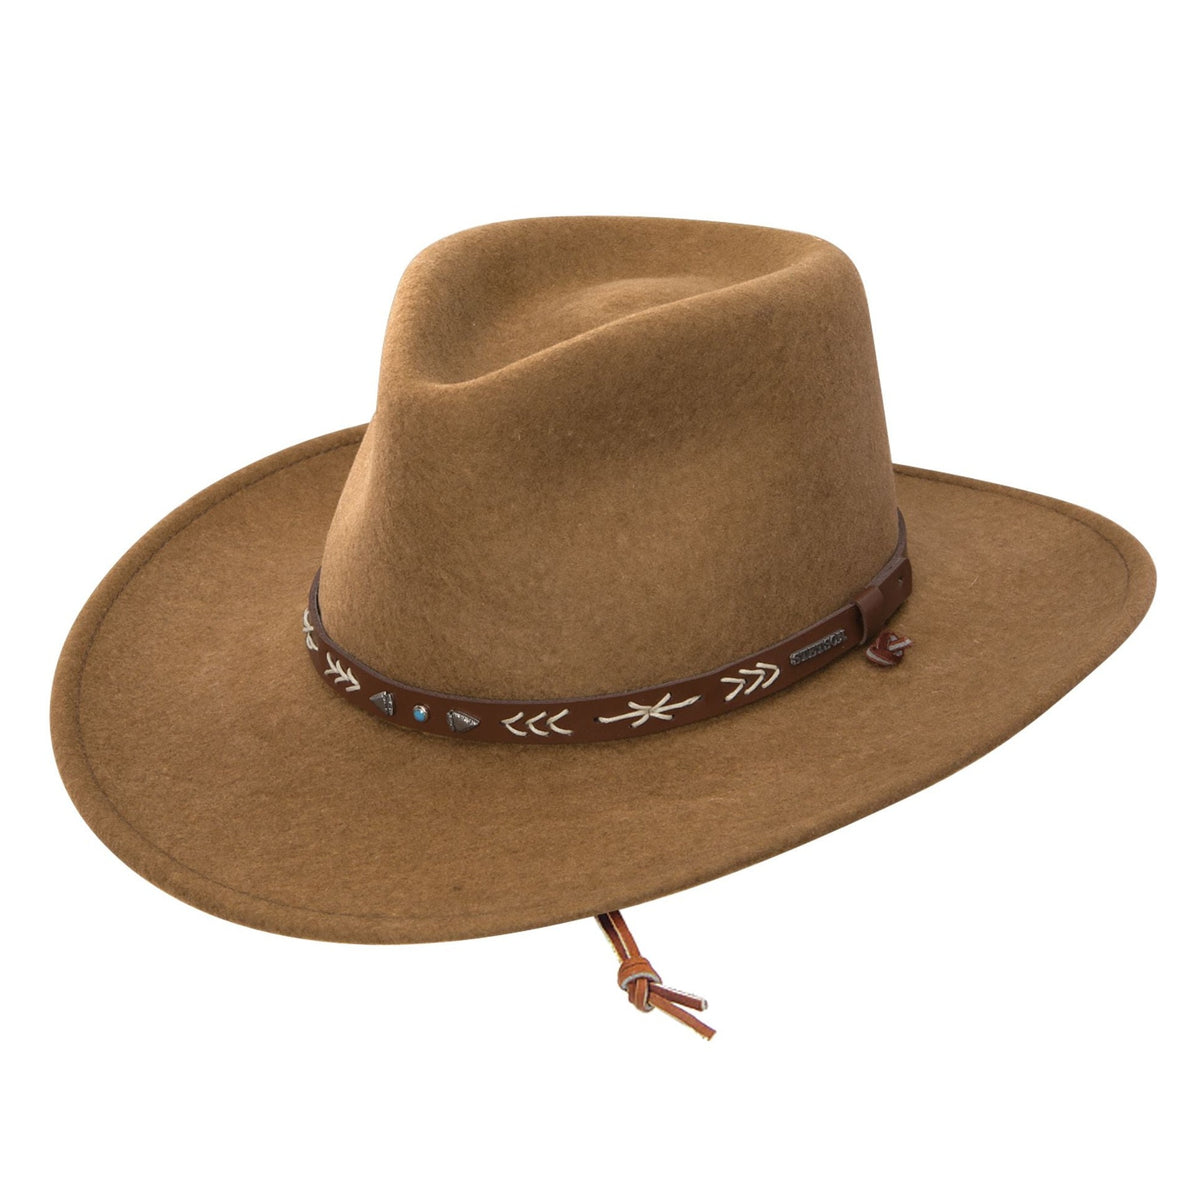 Stetson Santa Fe Felt Crushable Western Hat